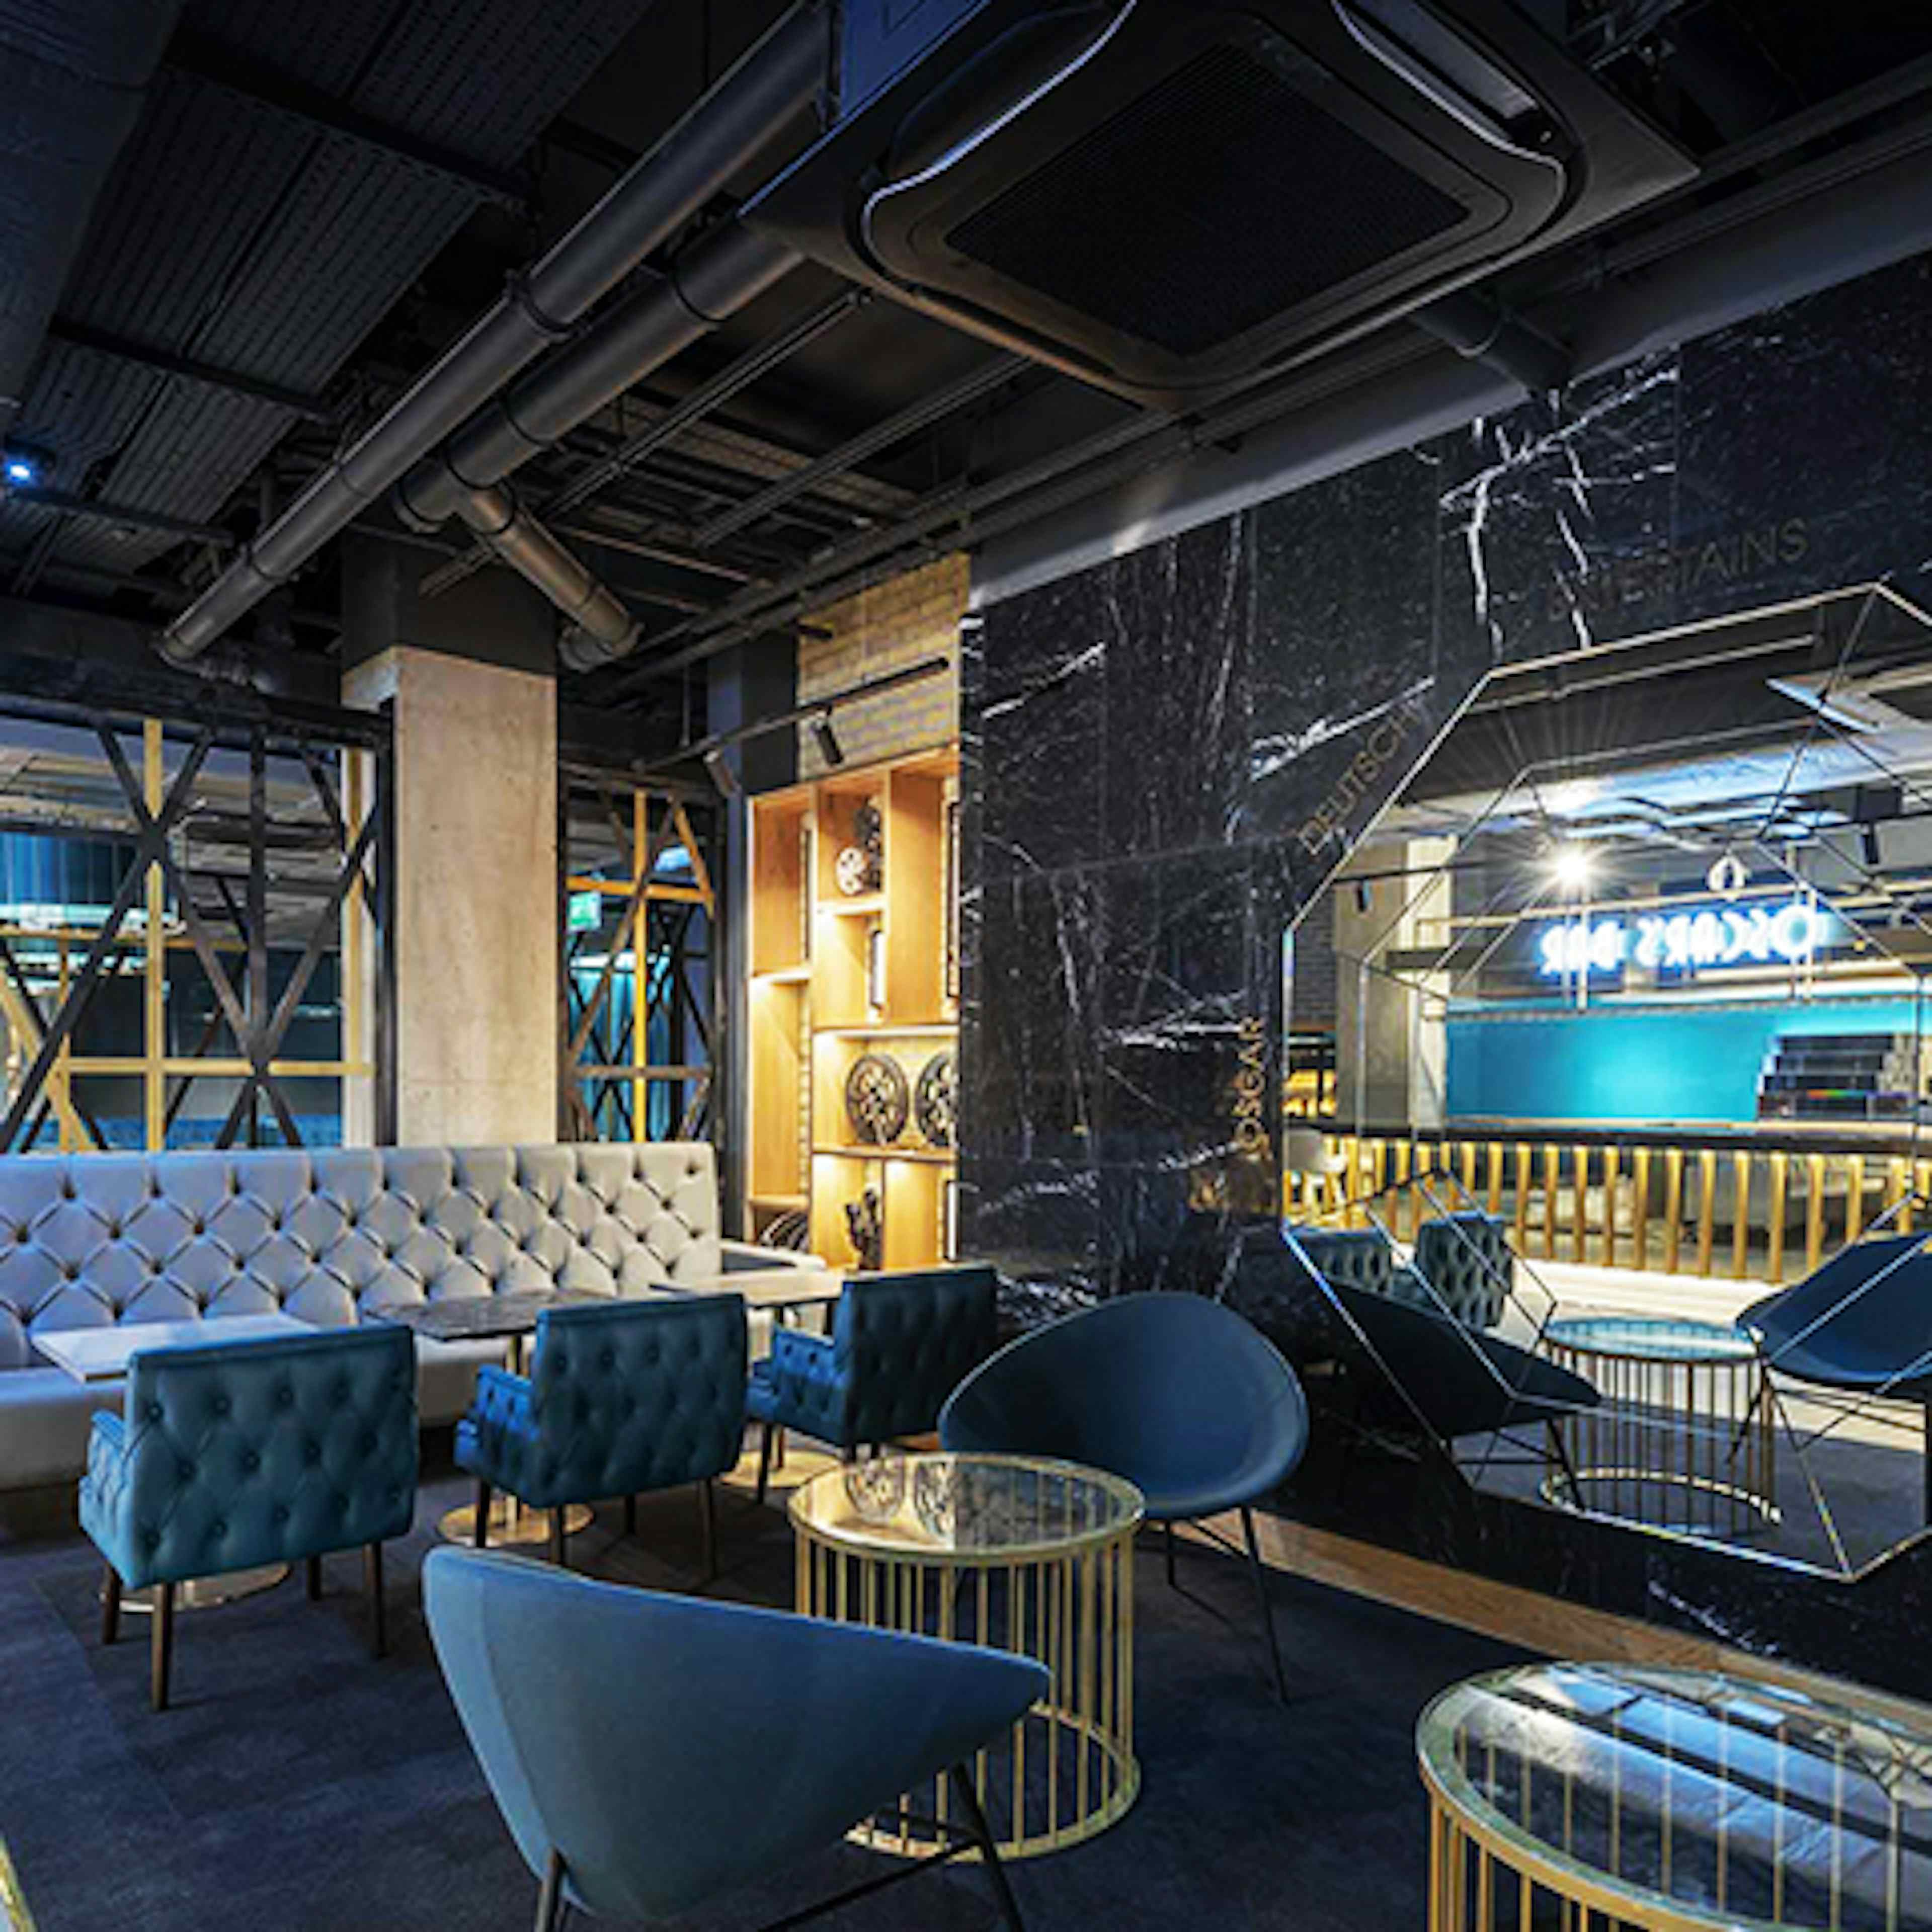 ODEON Luxe and Dine Islington - Foyer & Oscar's Bar image 2